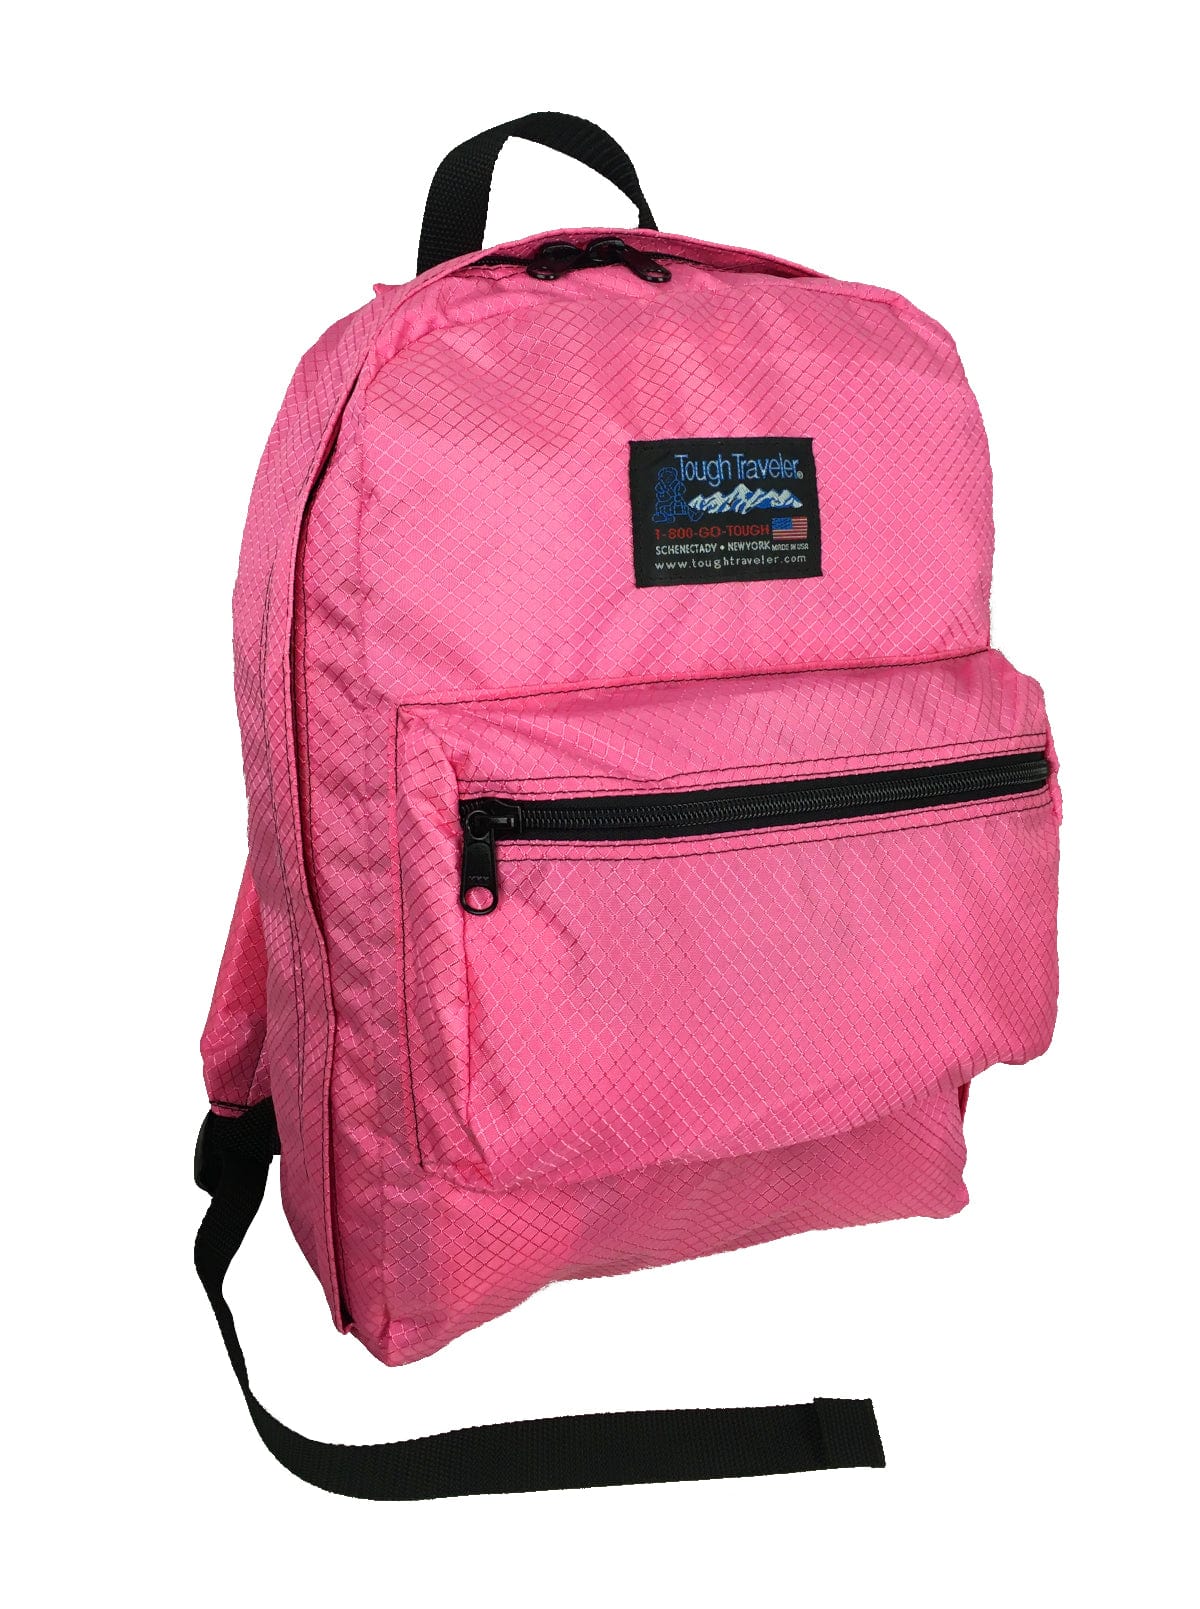 Made in USA OTHELLO Children's Backpacks